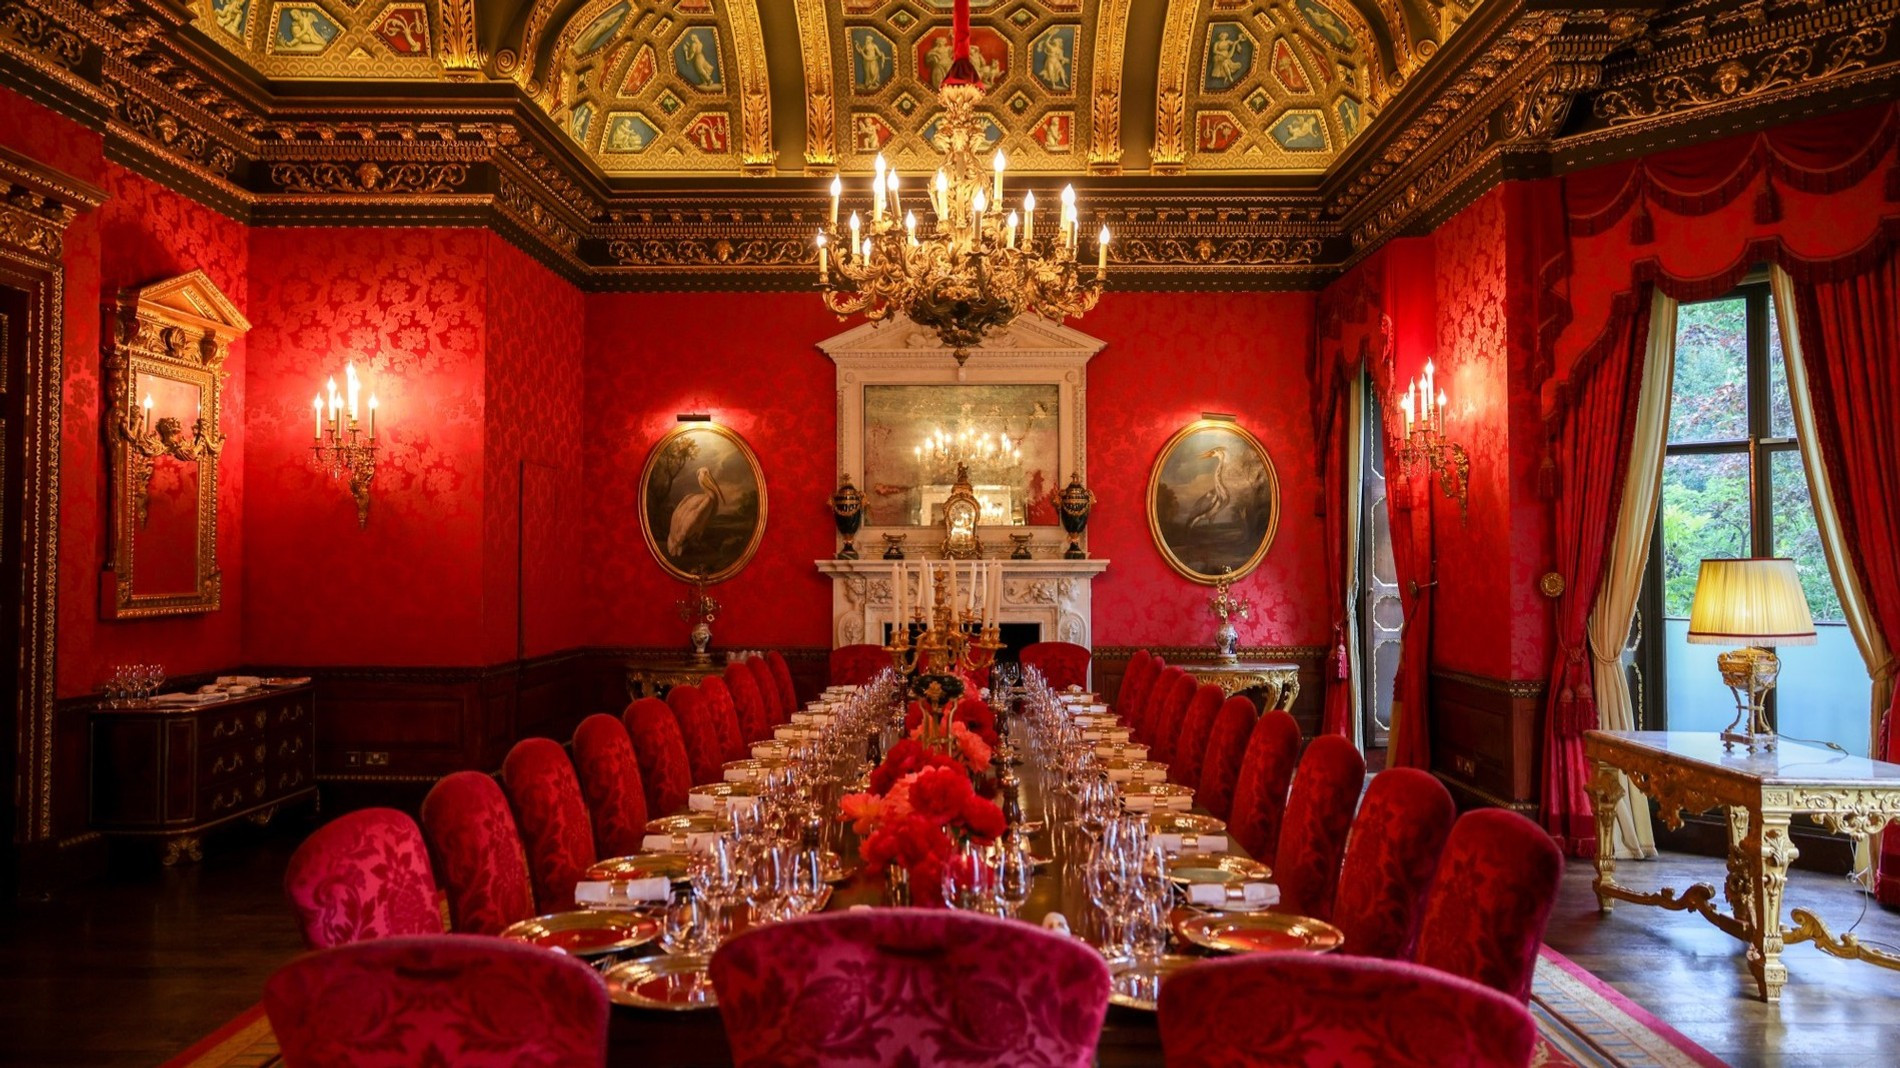 Отель The Ritz London
Фото: Getty Images